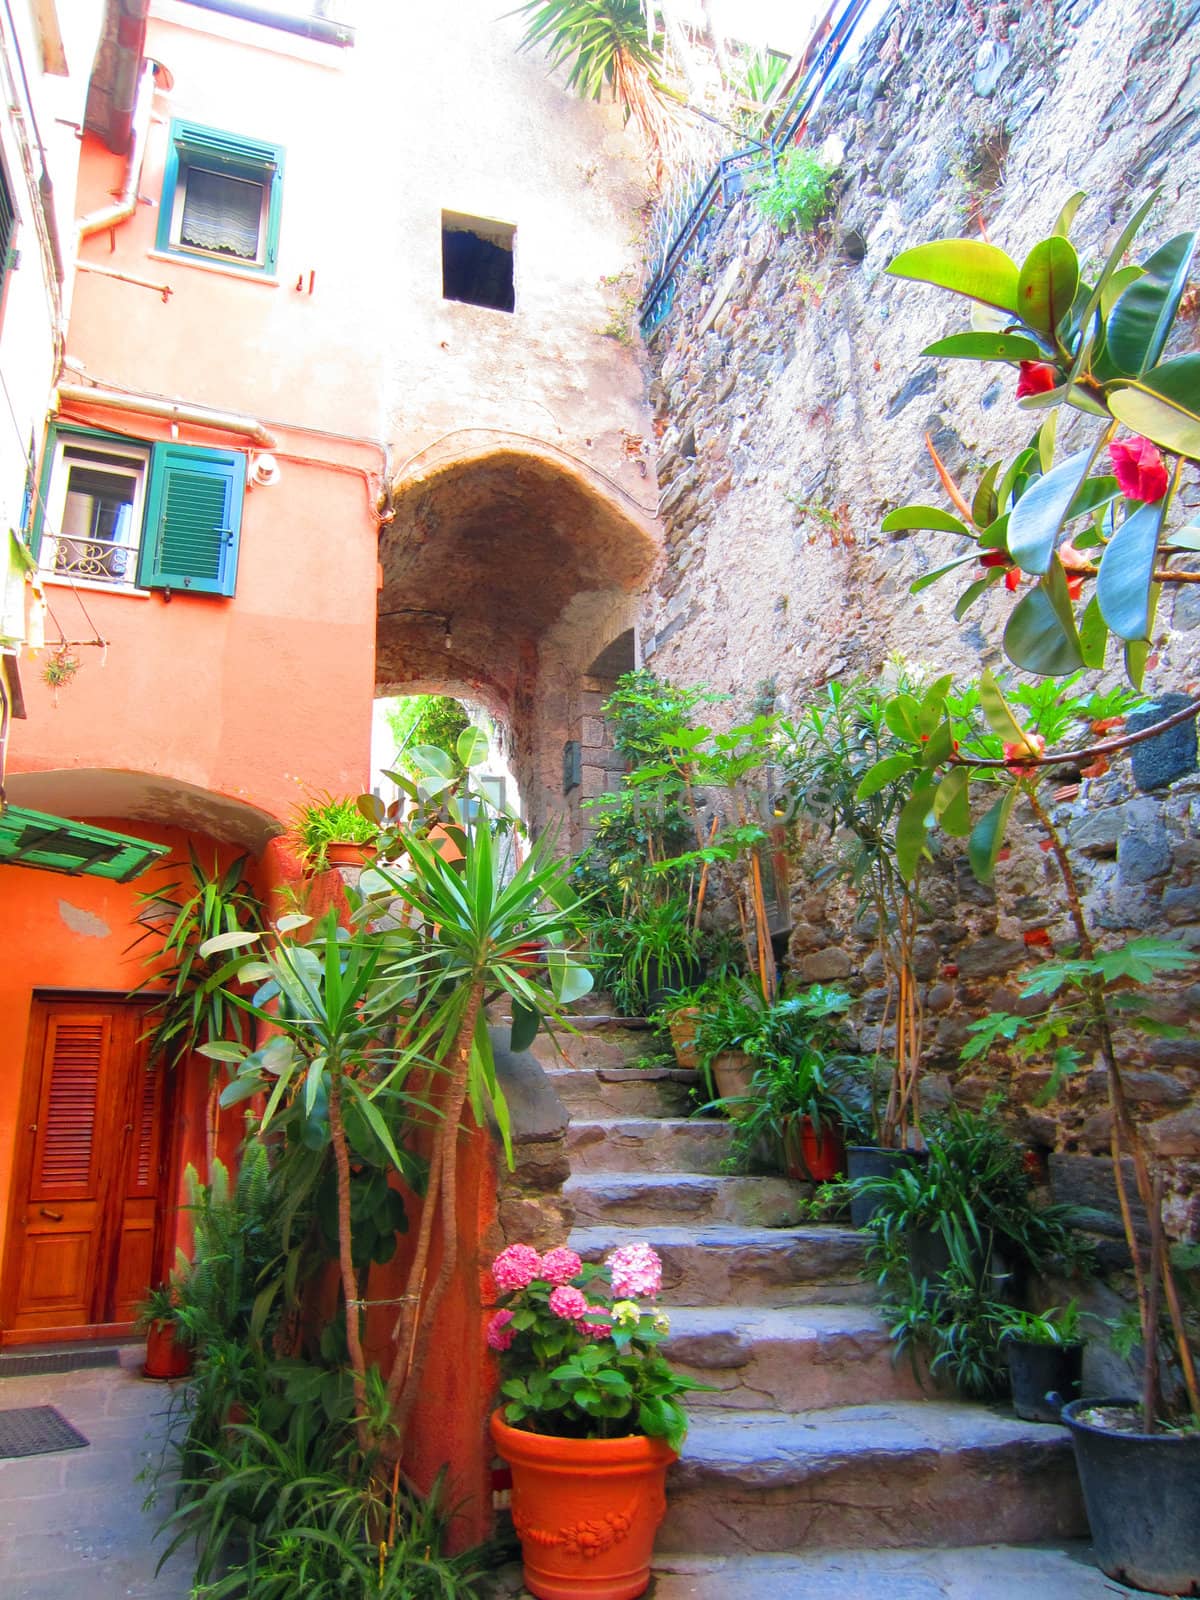 Steps in village on Italian Coast